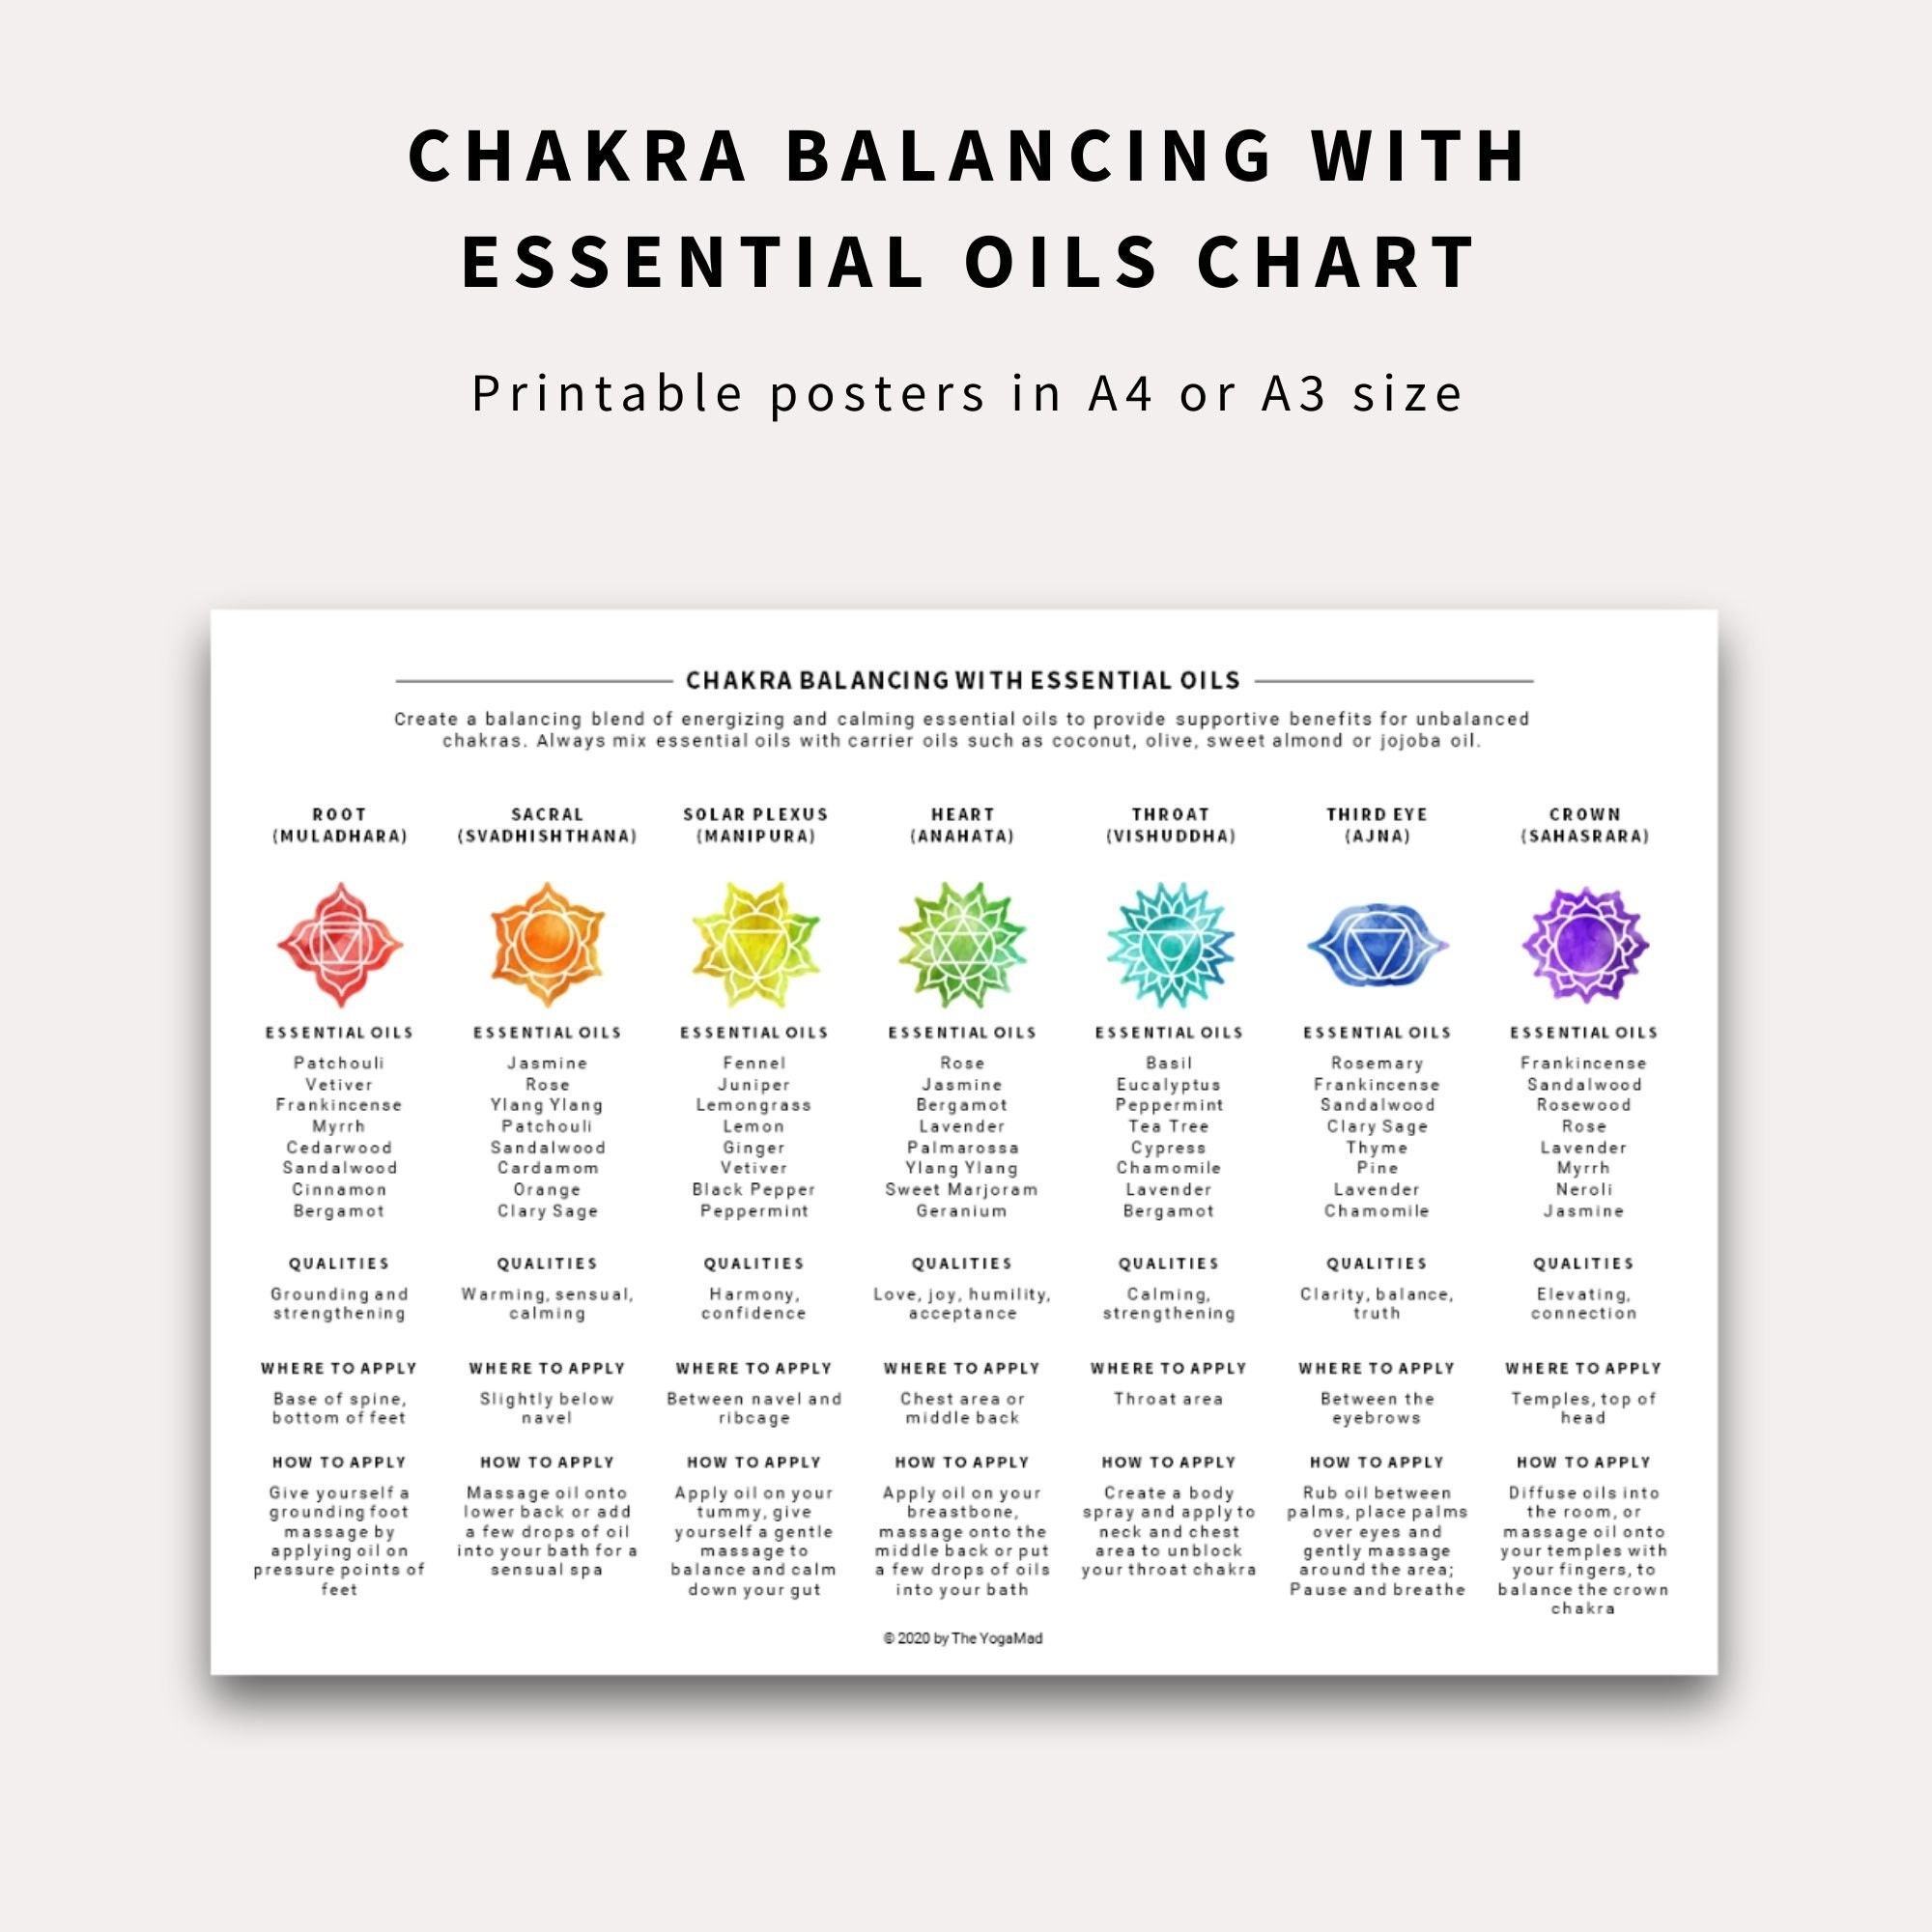 Chakra Balancing With Essential Oils 7 Chakras Chart 